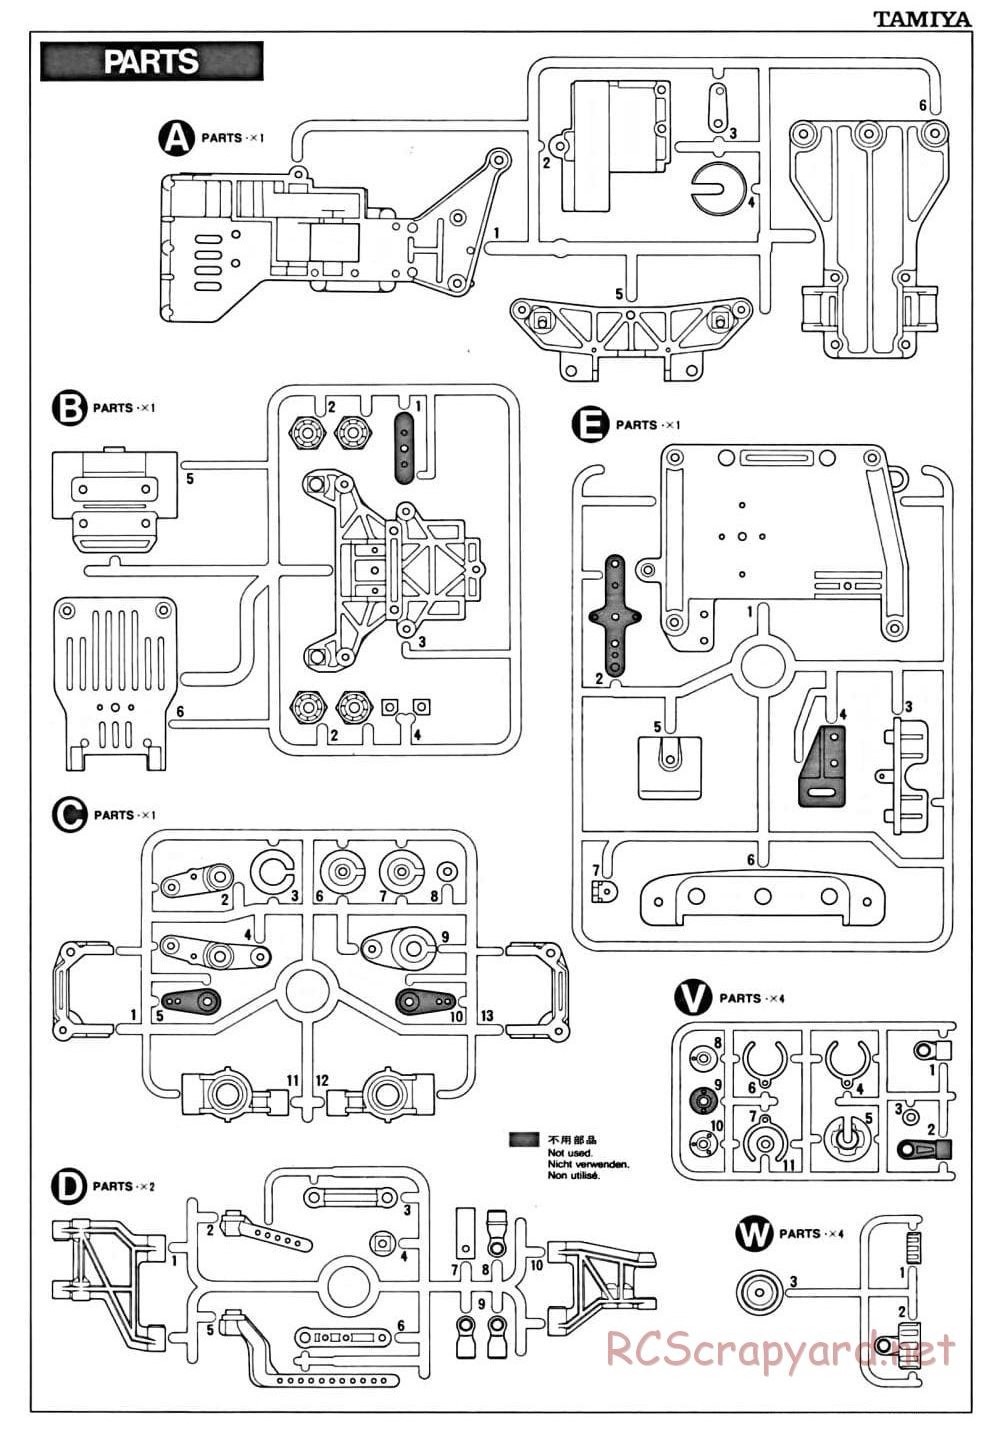 Tamiya - FF-01 Chassis - Manual - Page 21